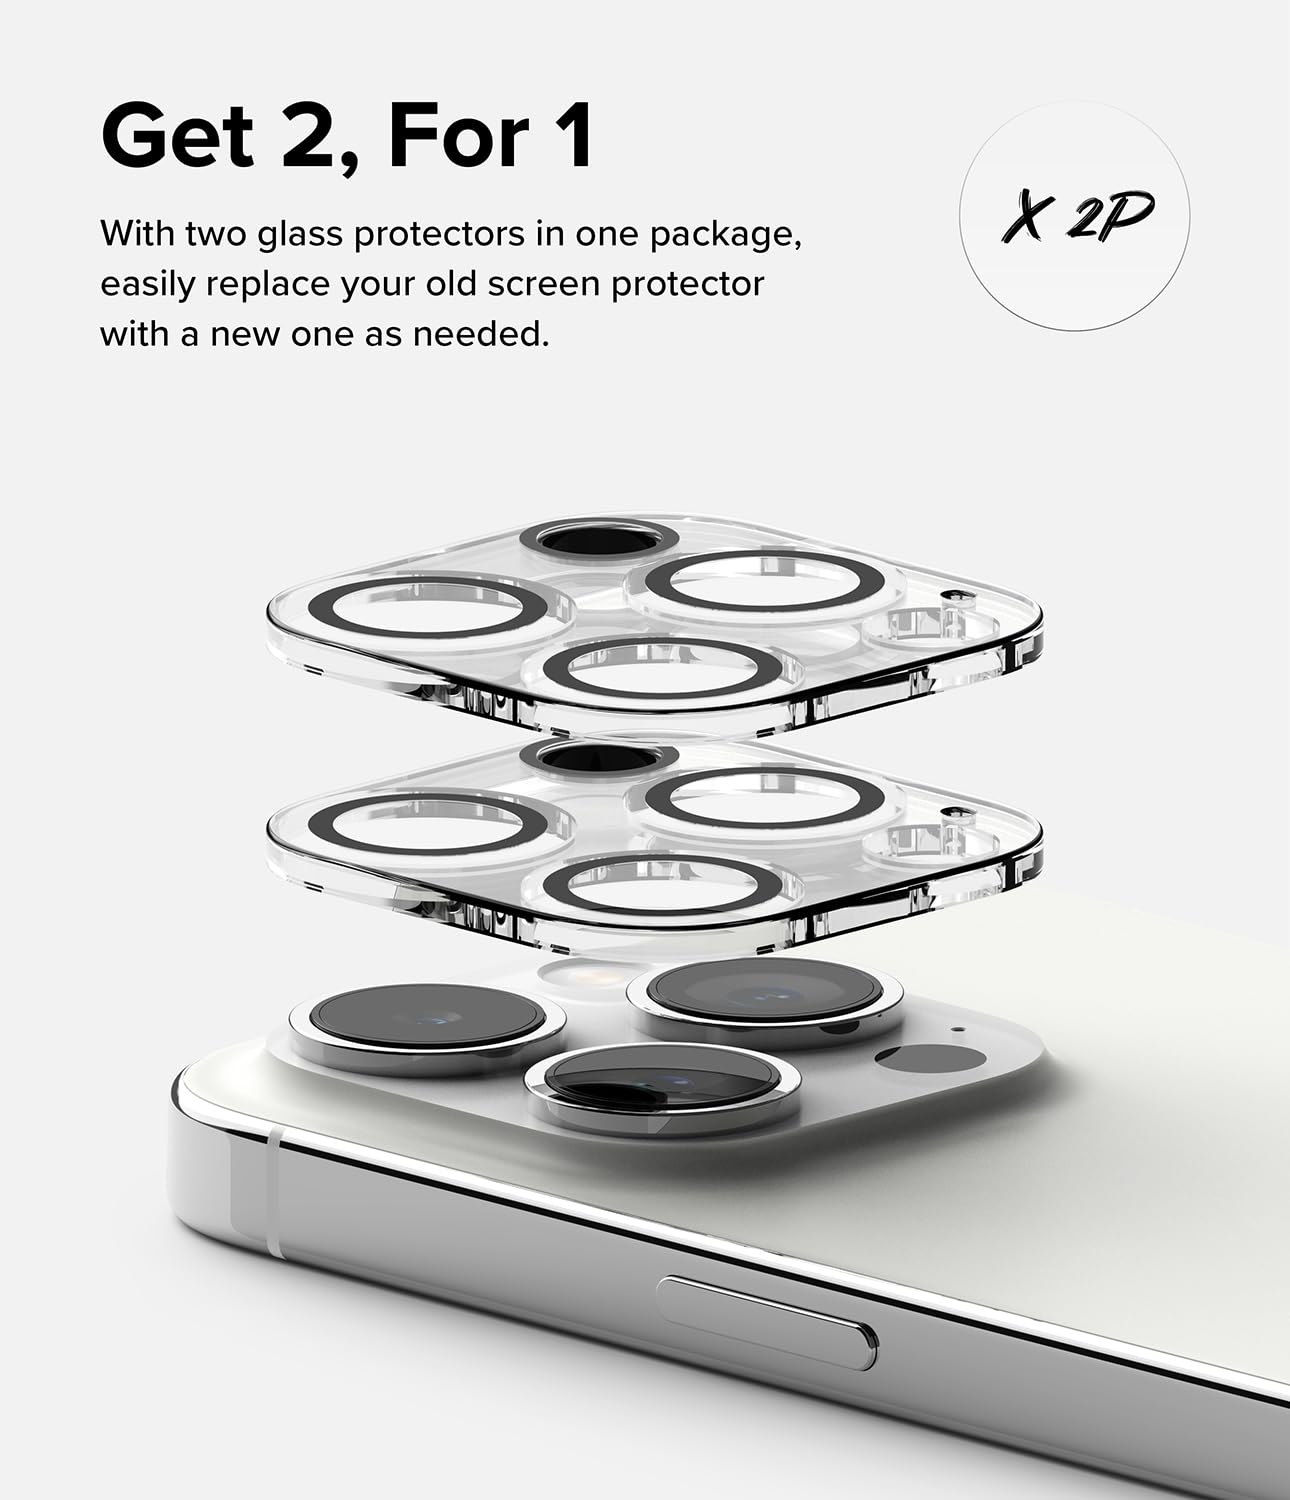 Vidrio de Cámara Ringke para iPhone 15 Pro Max Protector Glass 2 Unidades -  SmartPro